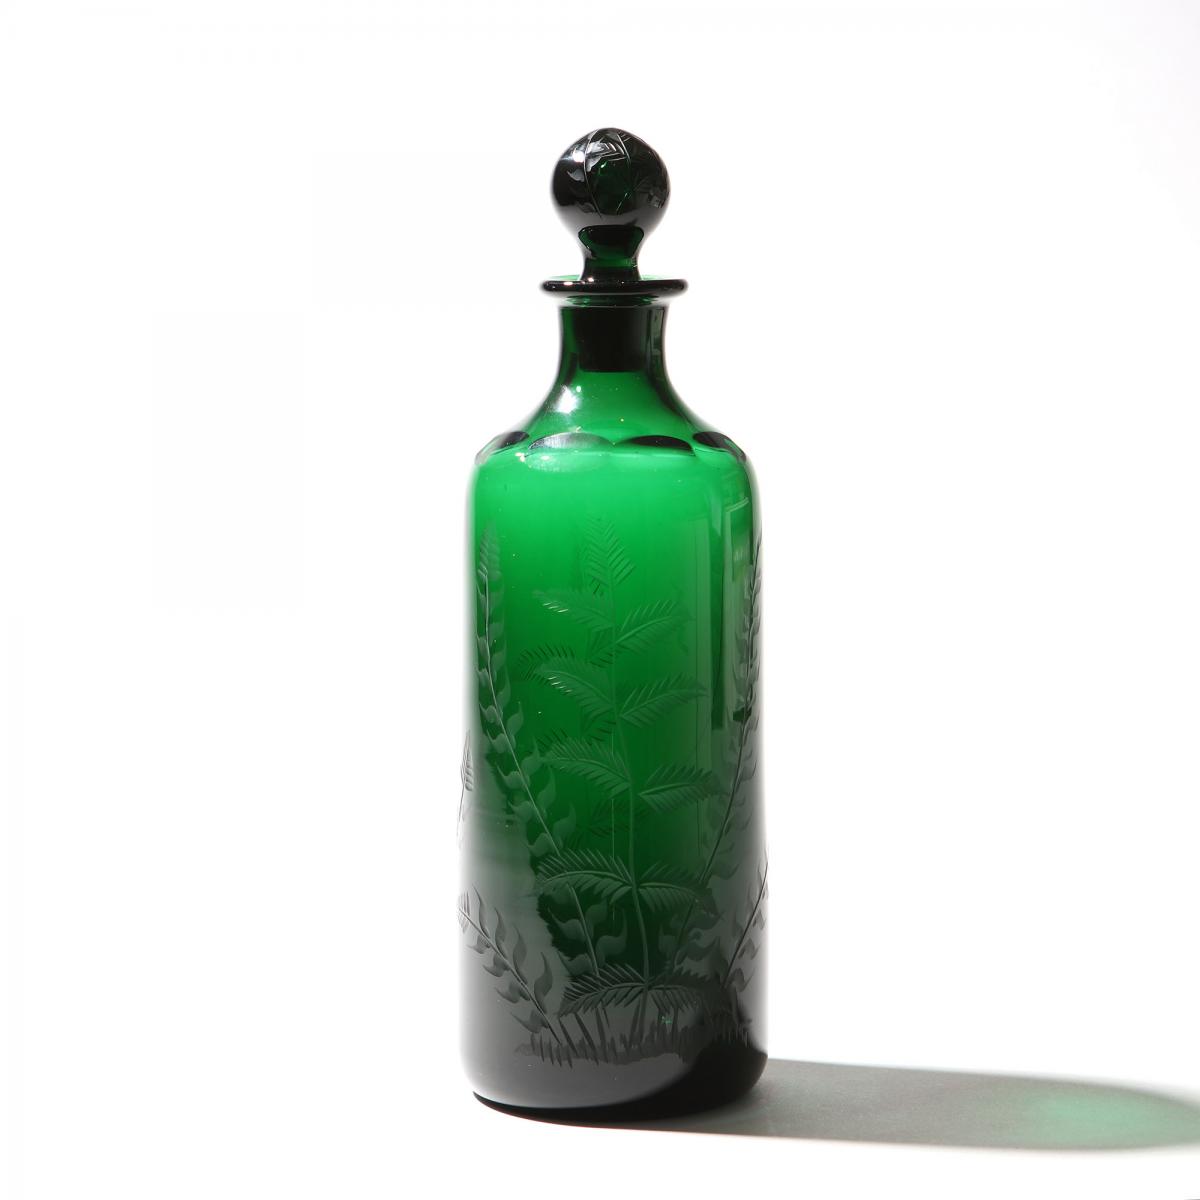 A Victorian green glass decanter